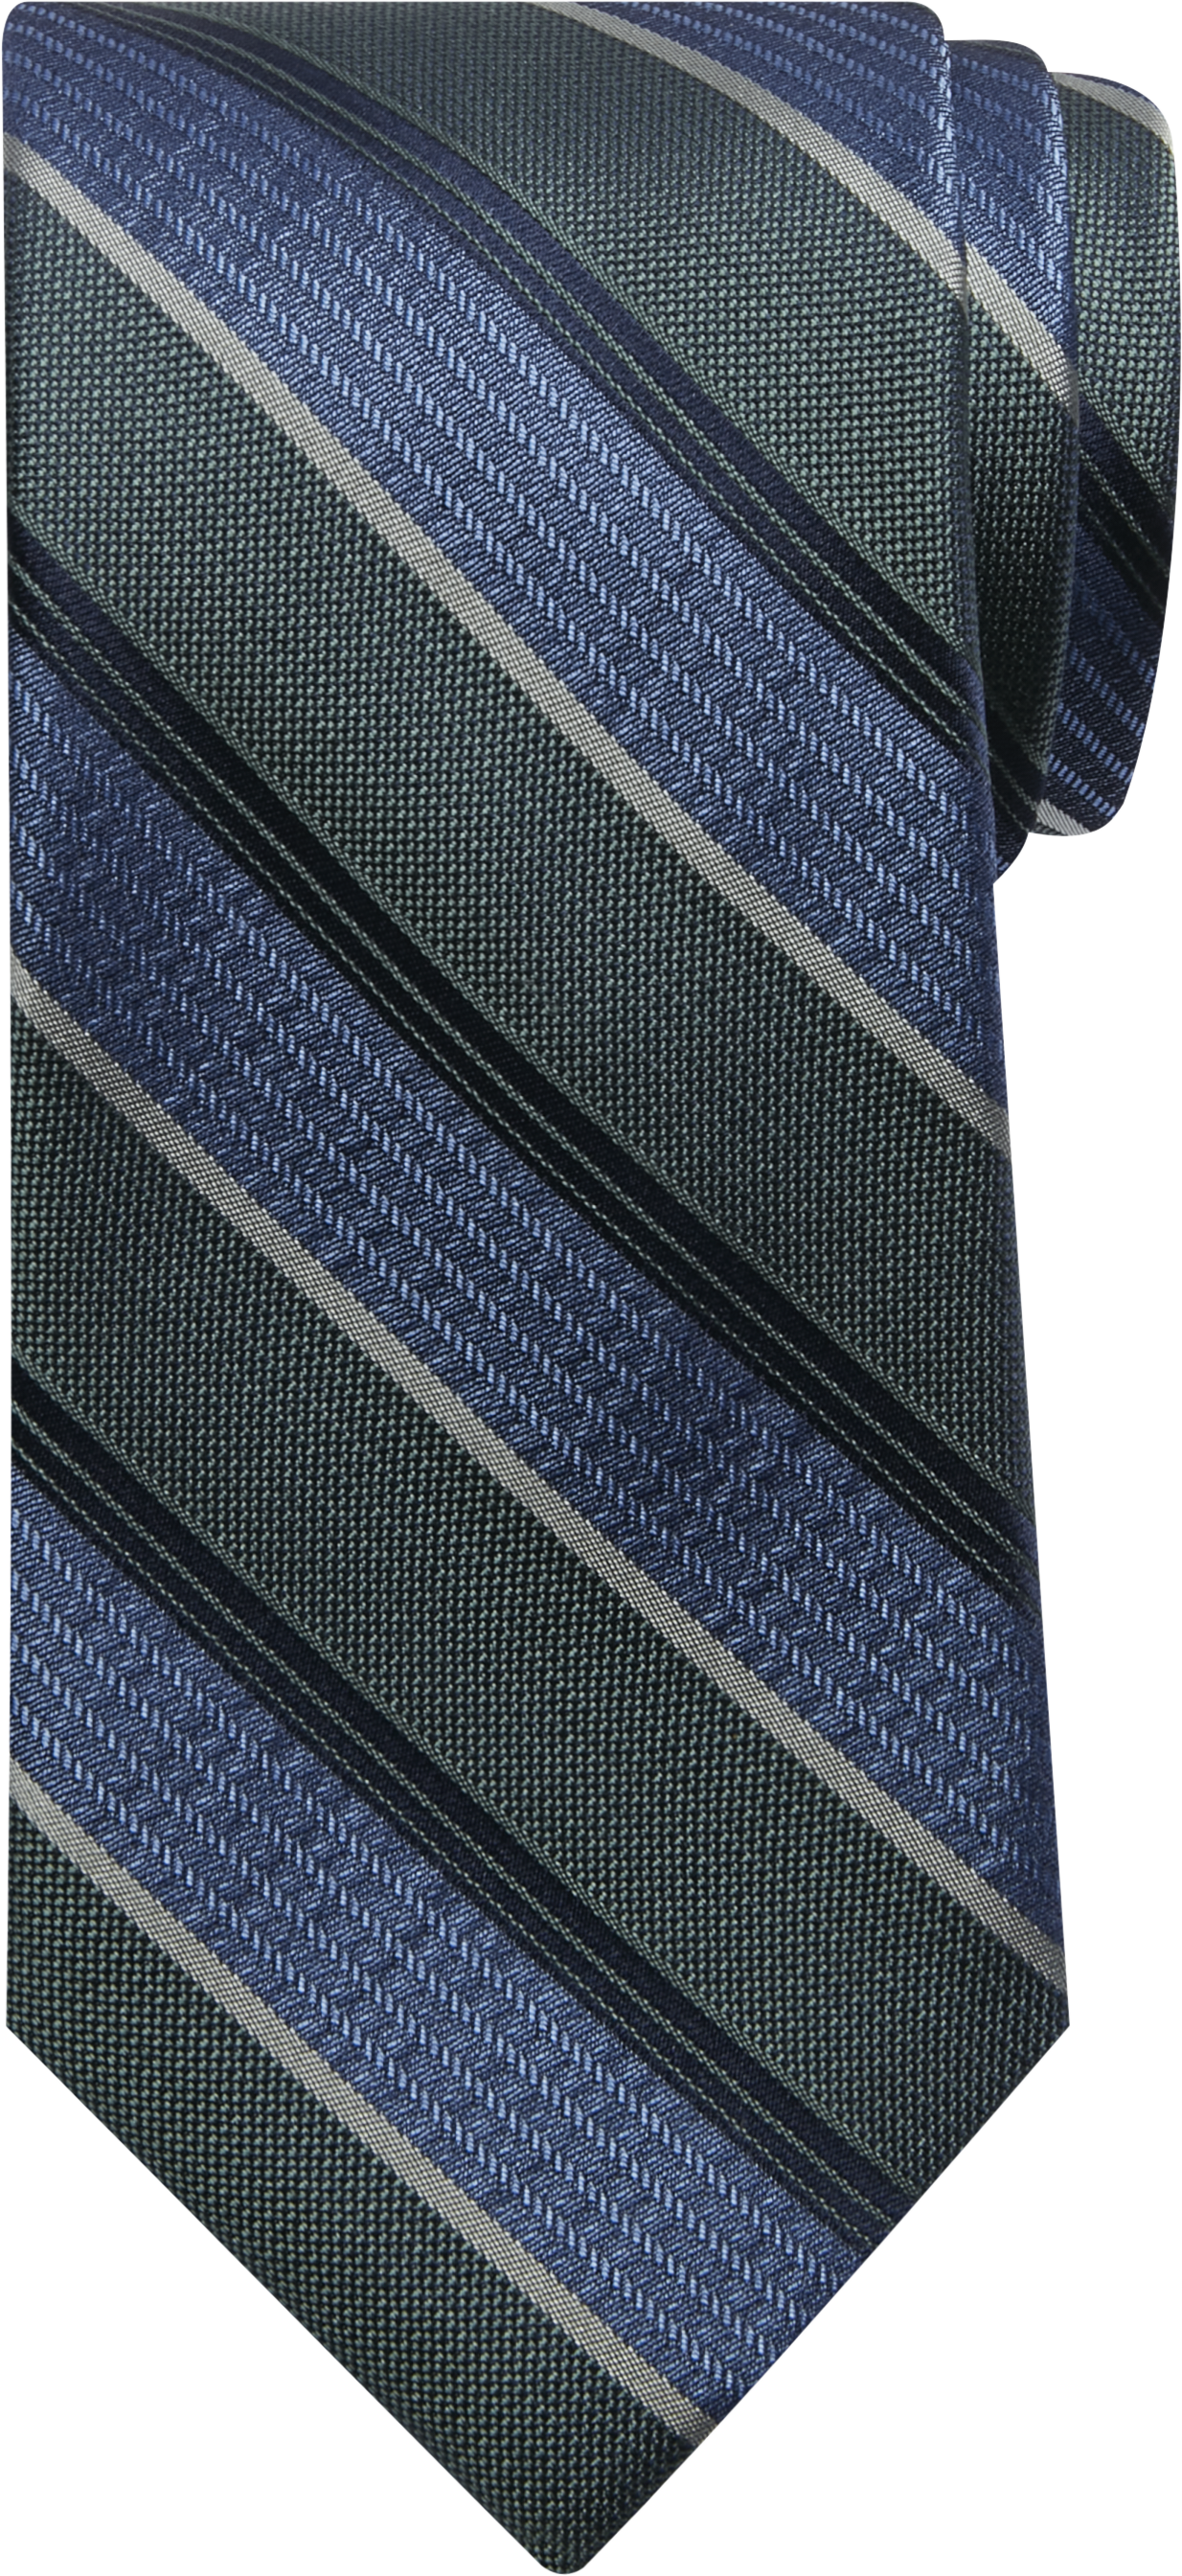 Narrow City Stripe Tie